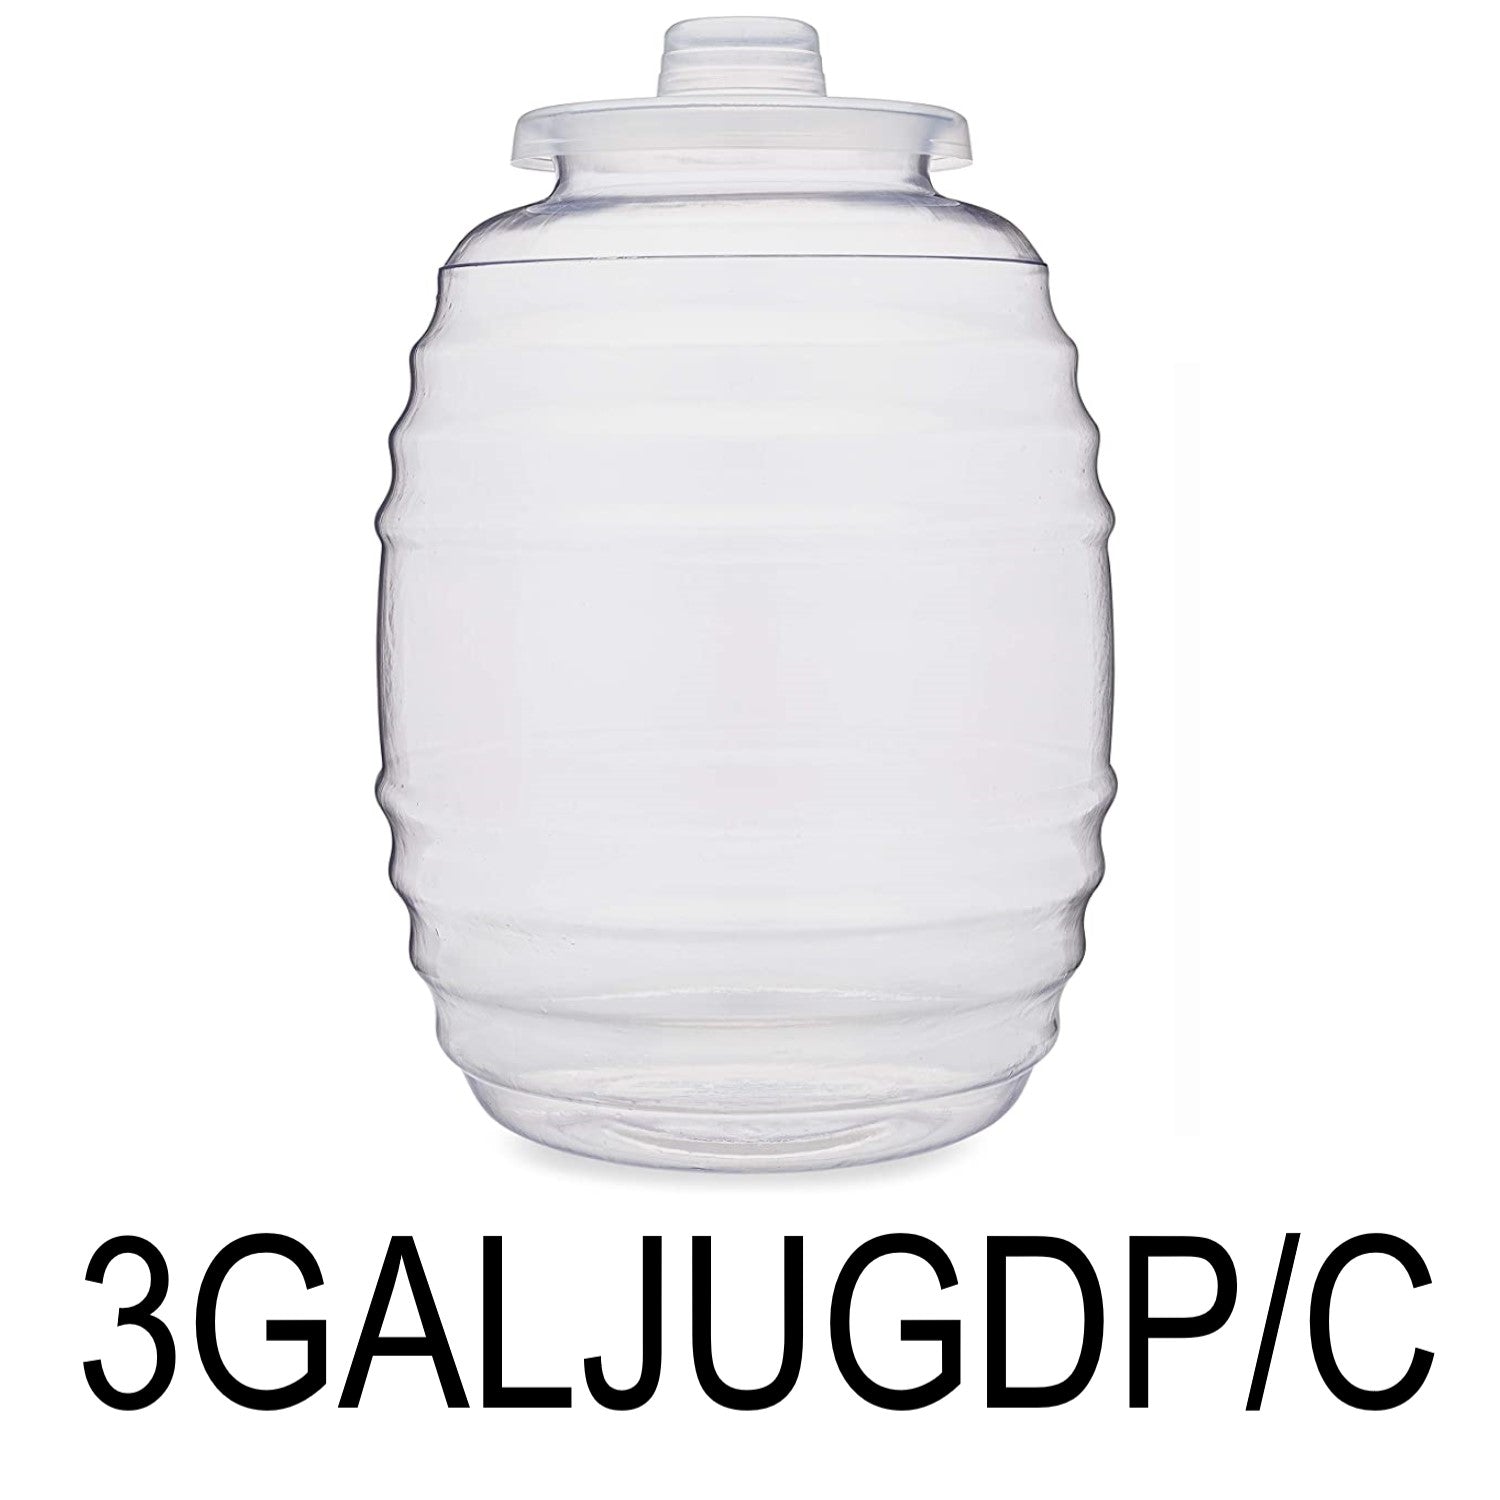 1 Gallon Jug with Lid and Spout - Aguas Frescas Vitrolero Plastic